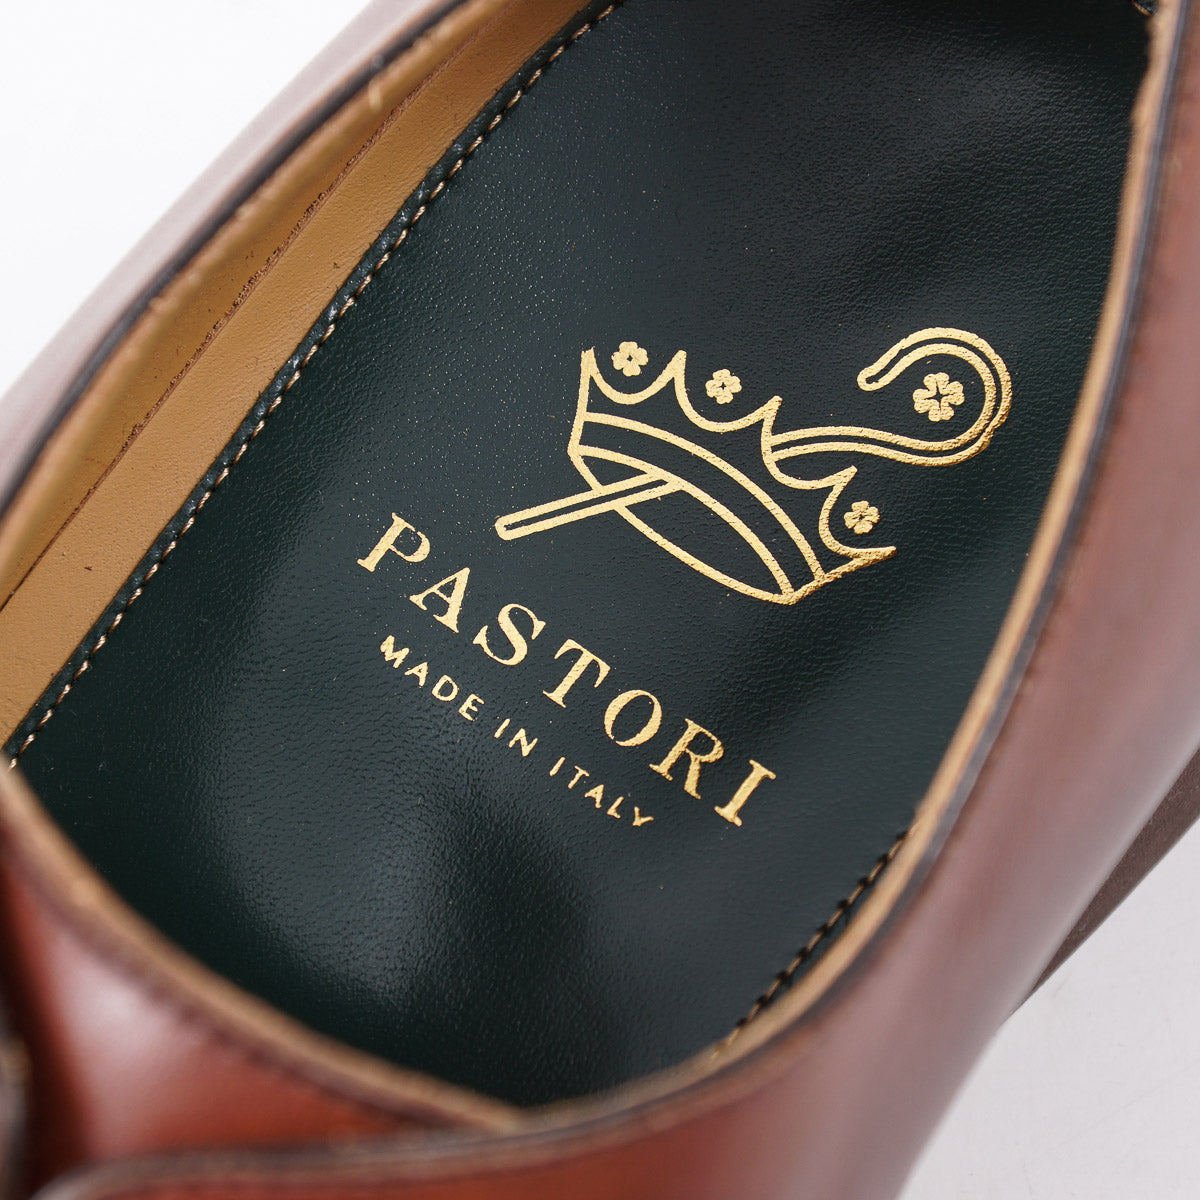 Pastori 'Claudius' Calf Leather Derby - Top Shelf Apparel